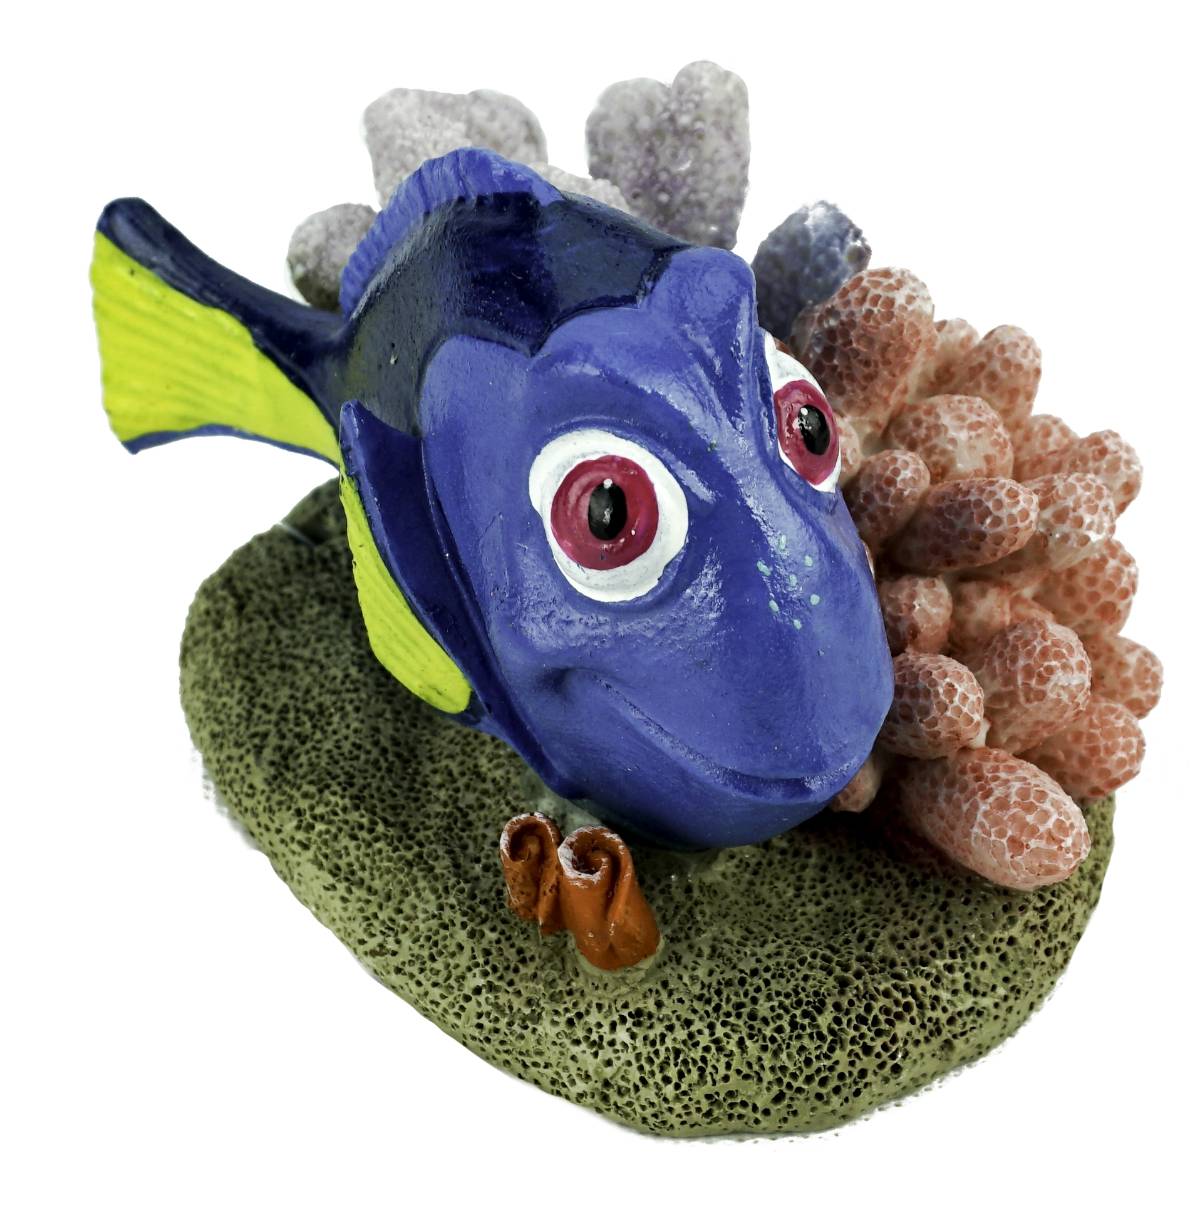 Penn-Plax Disney Finding Dory Small Aquarium Ornament - Dory with